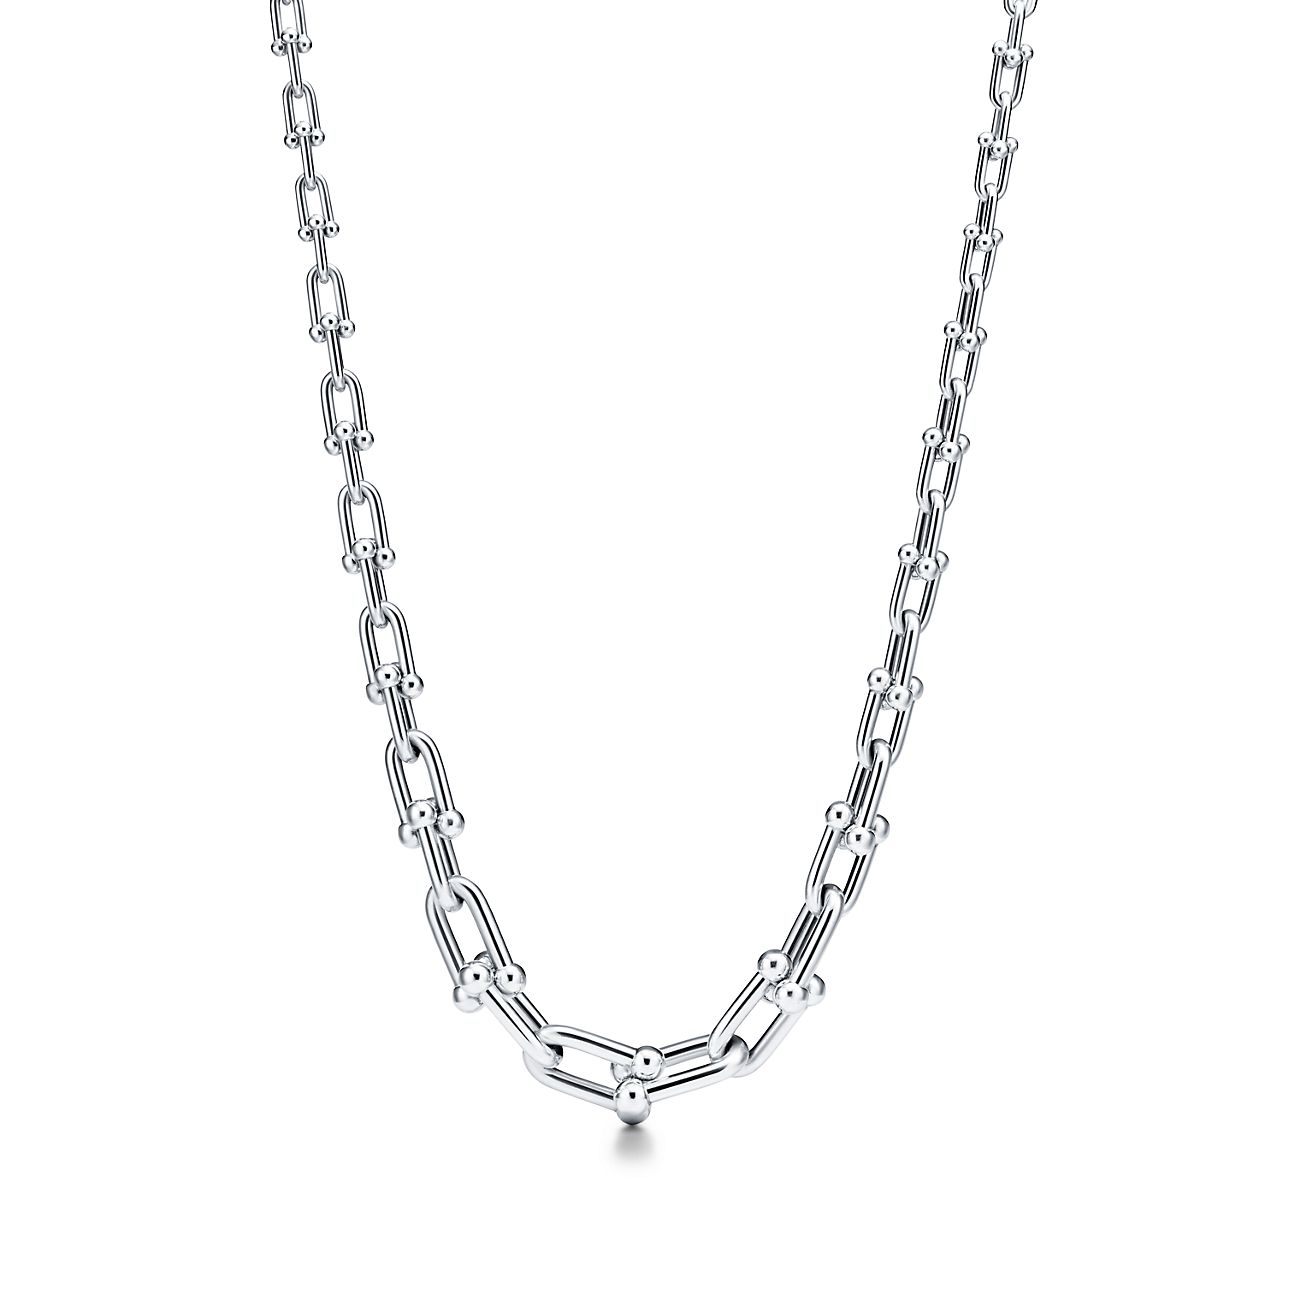 Tiffany HardWear graduated link necklace in sterling silver. | Tiffany & Co.